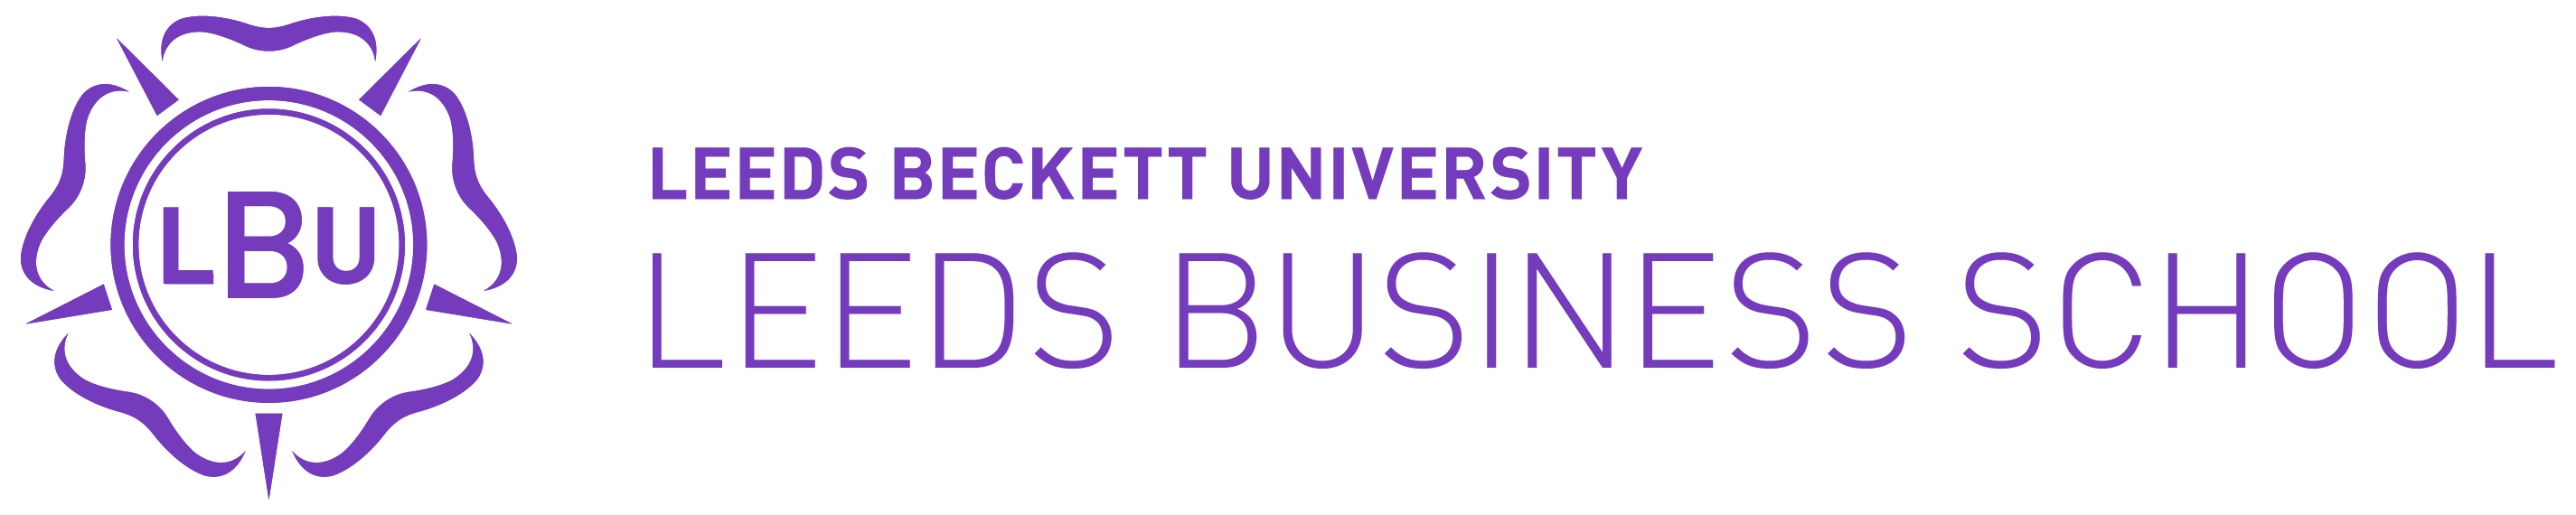 Leeds Business School, Leeds Beckett University 